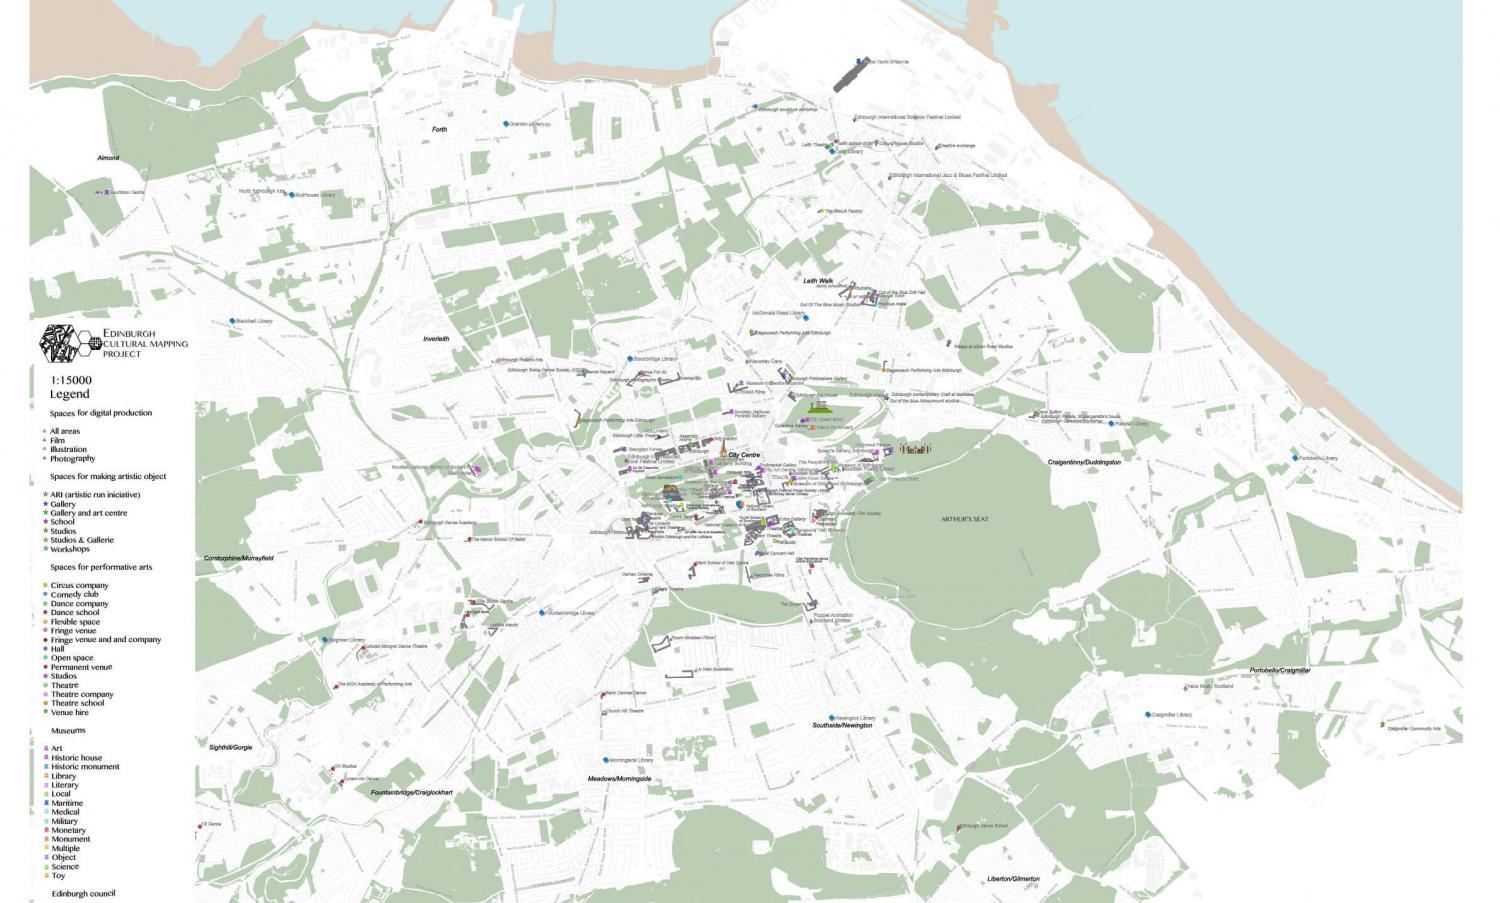 A map showing Edinburgh's activities (c) university of Edinburgh